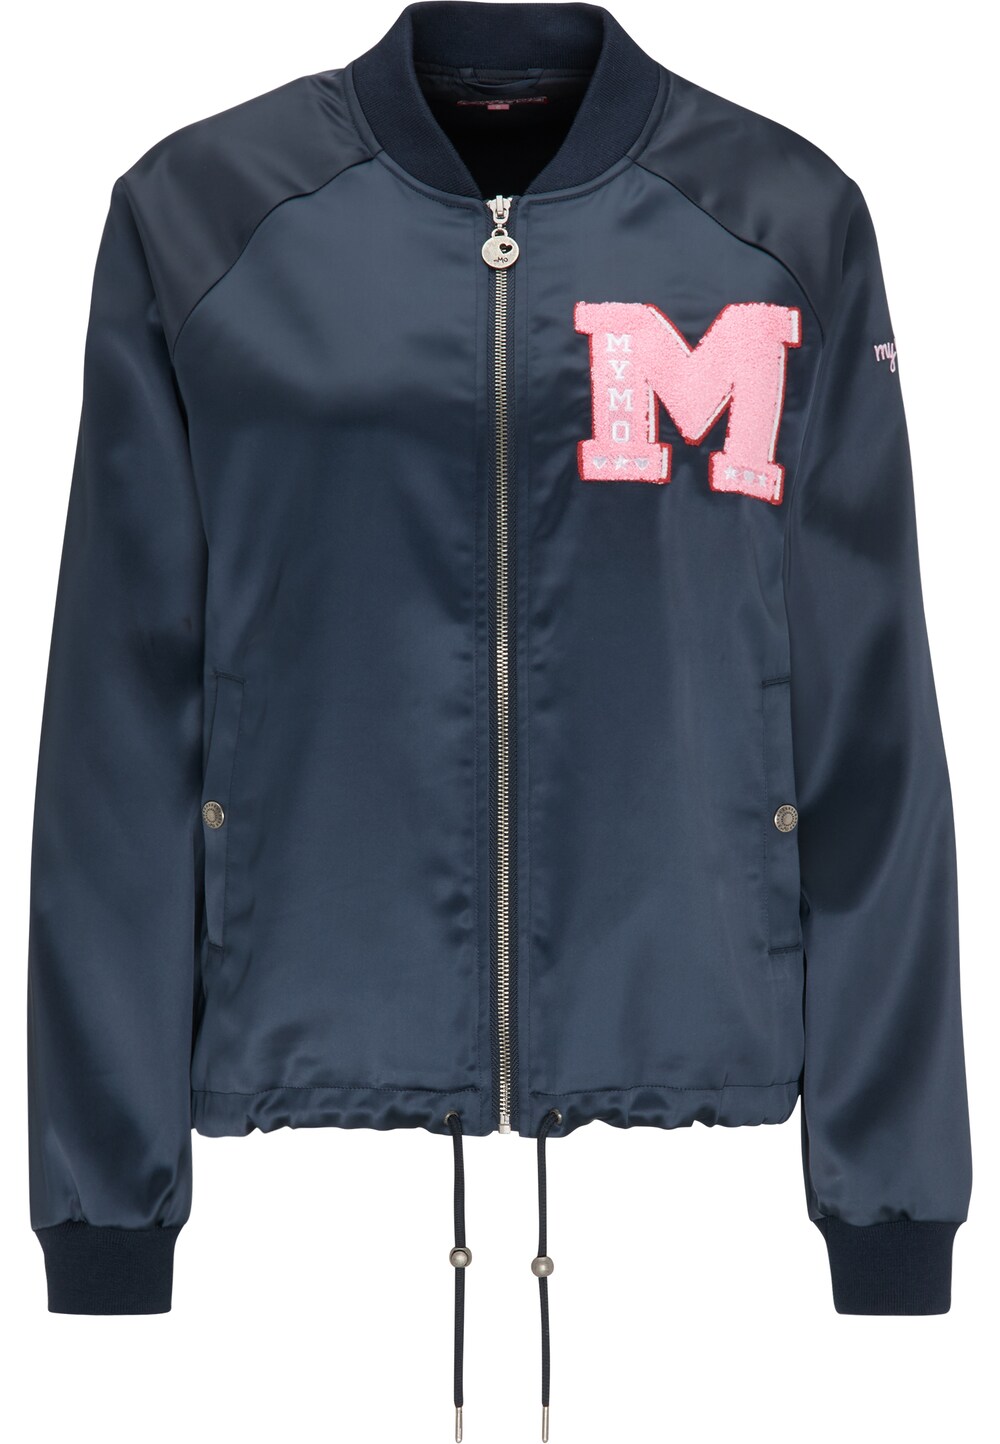 Межсезонная куртка MYMO, морской синий